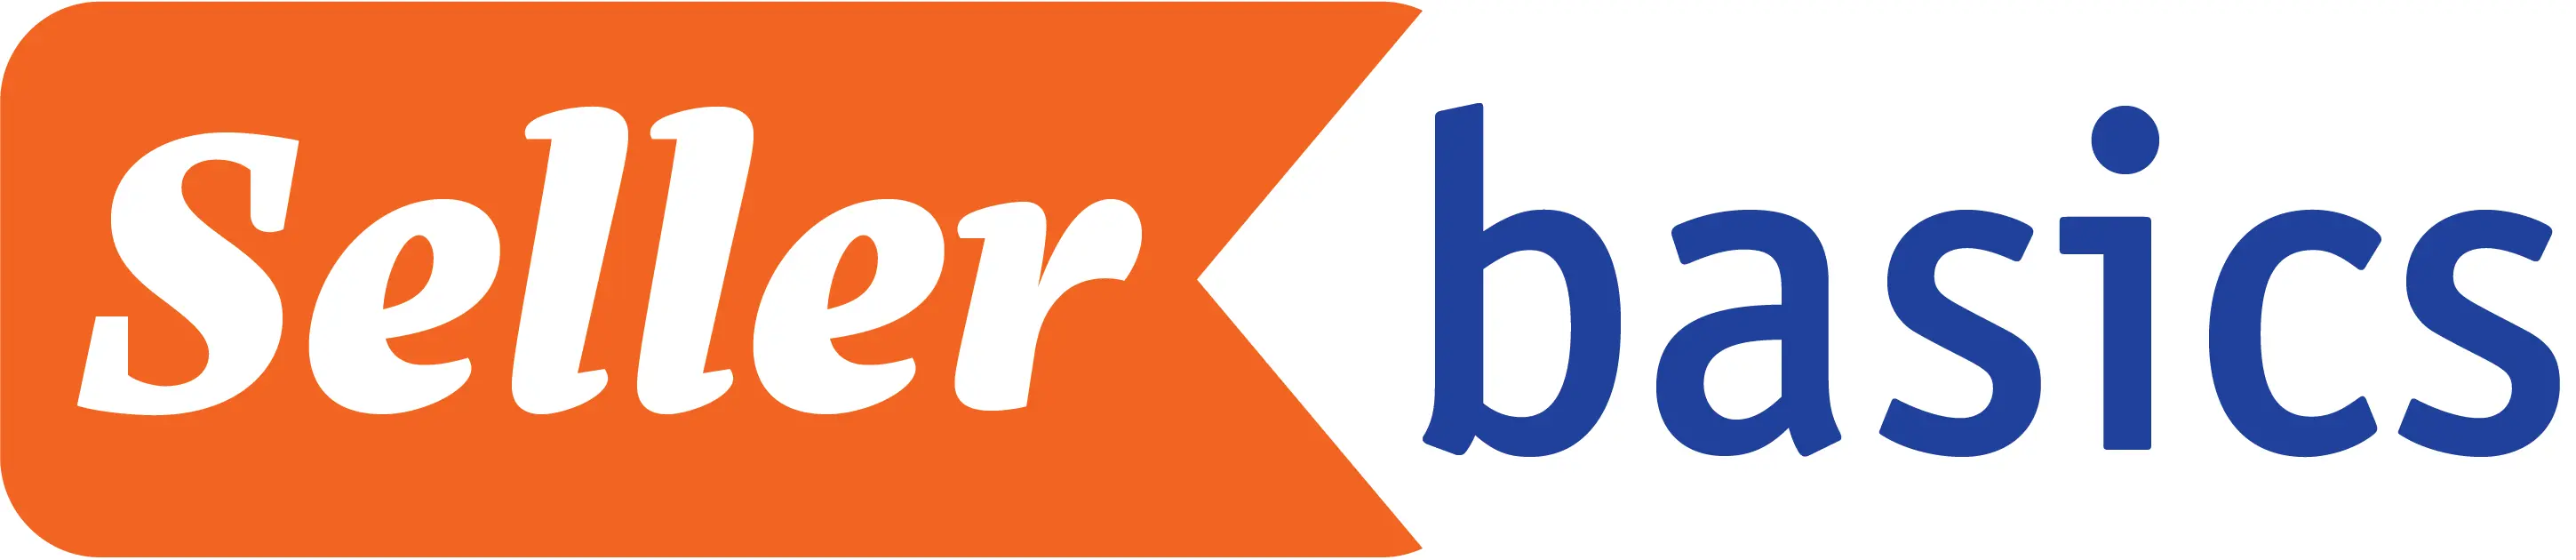 SellerBasics logo